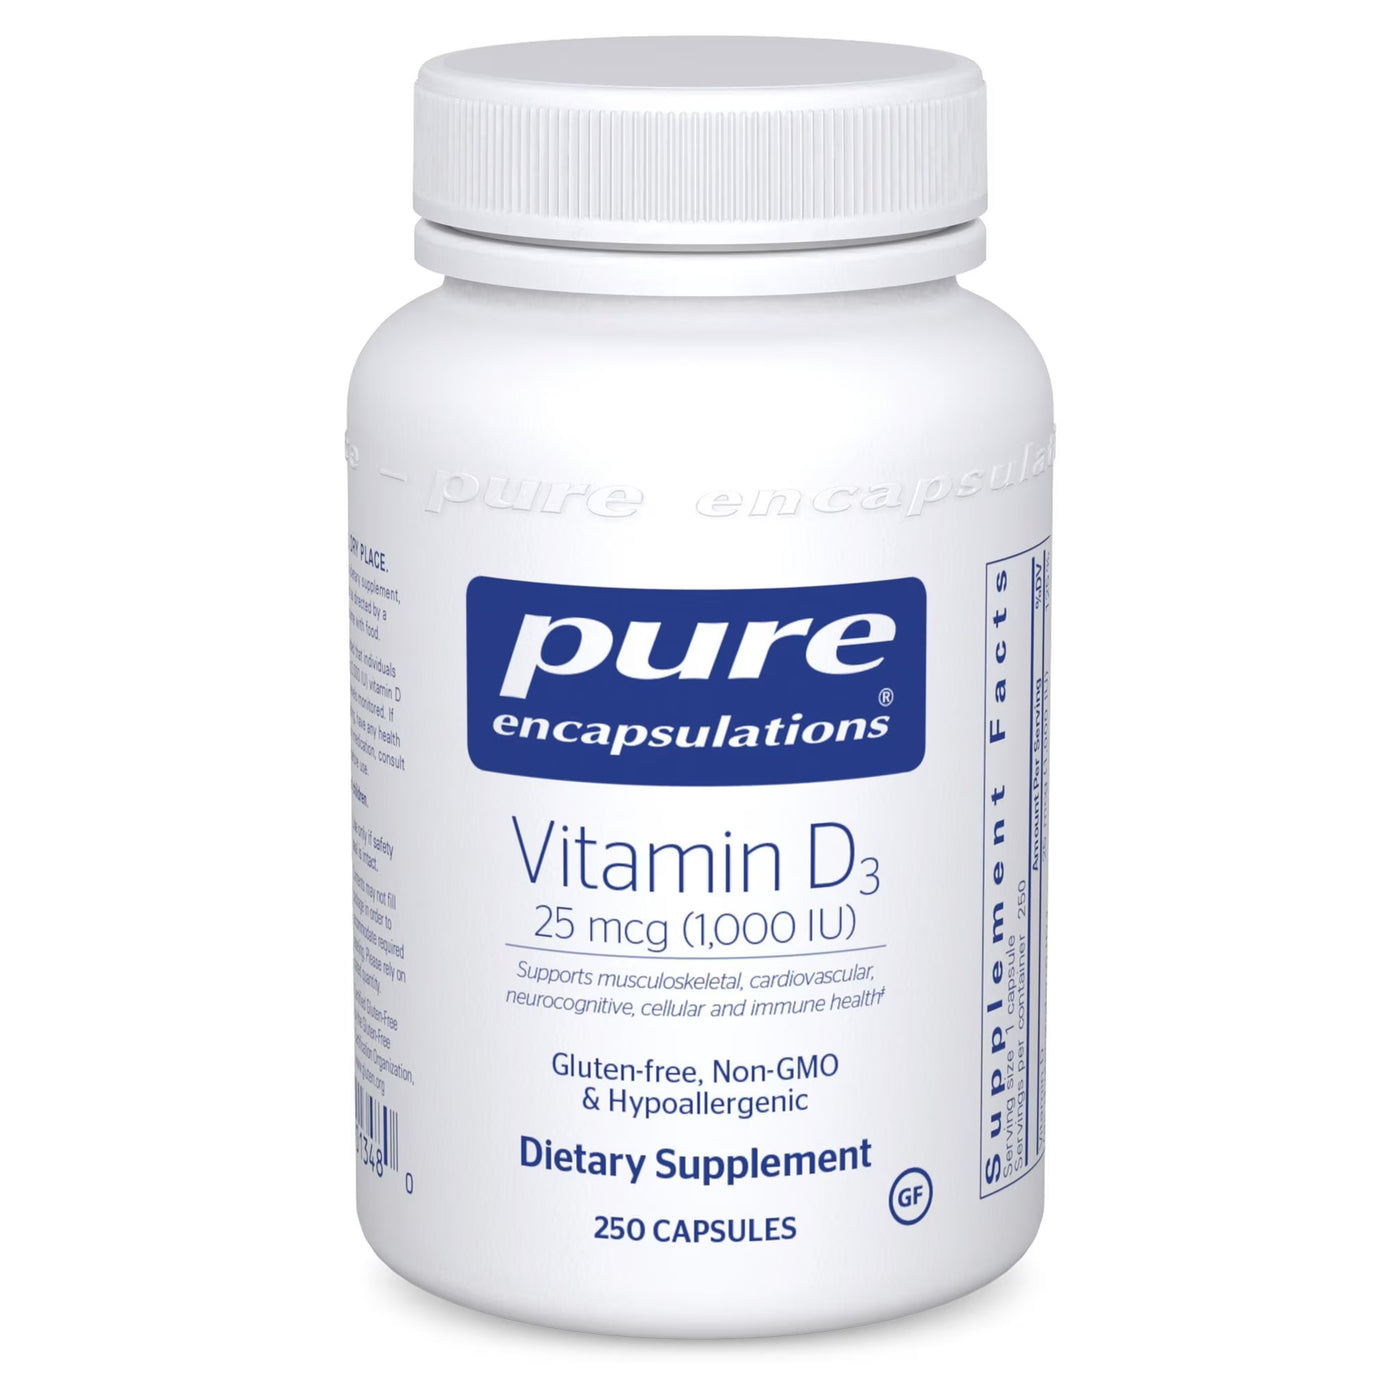 Vitamin D3 (1,000 IU)